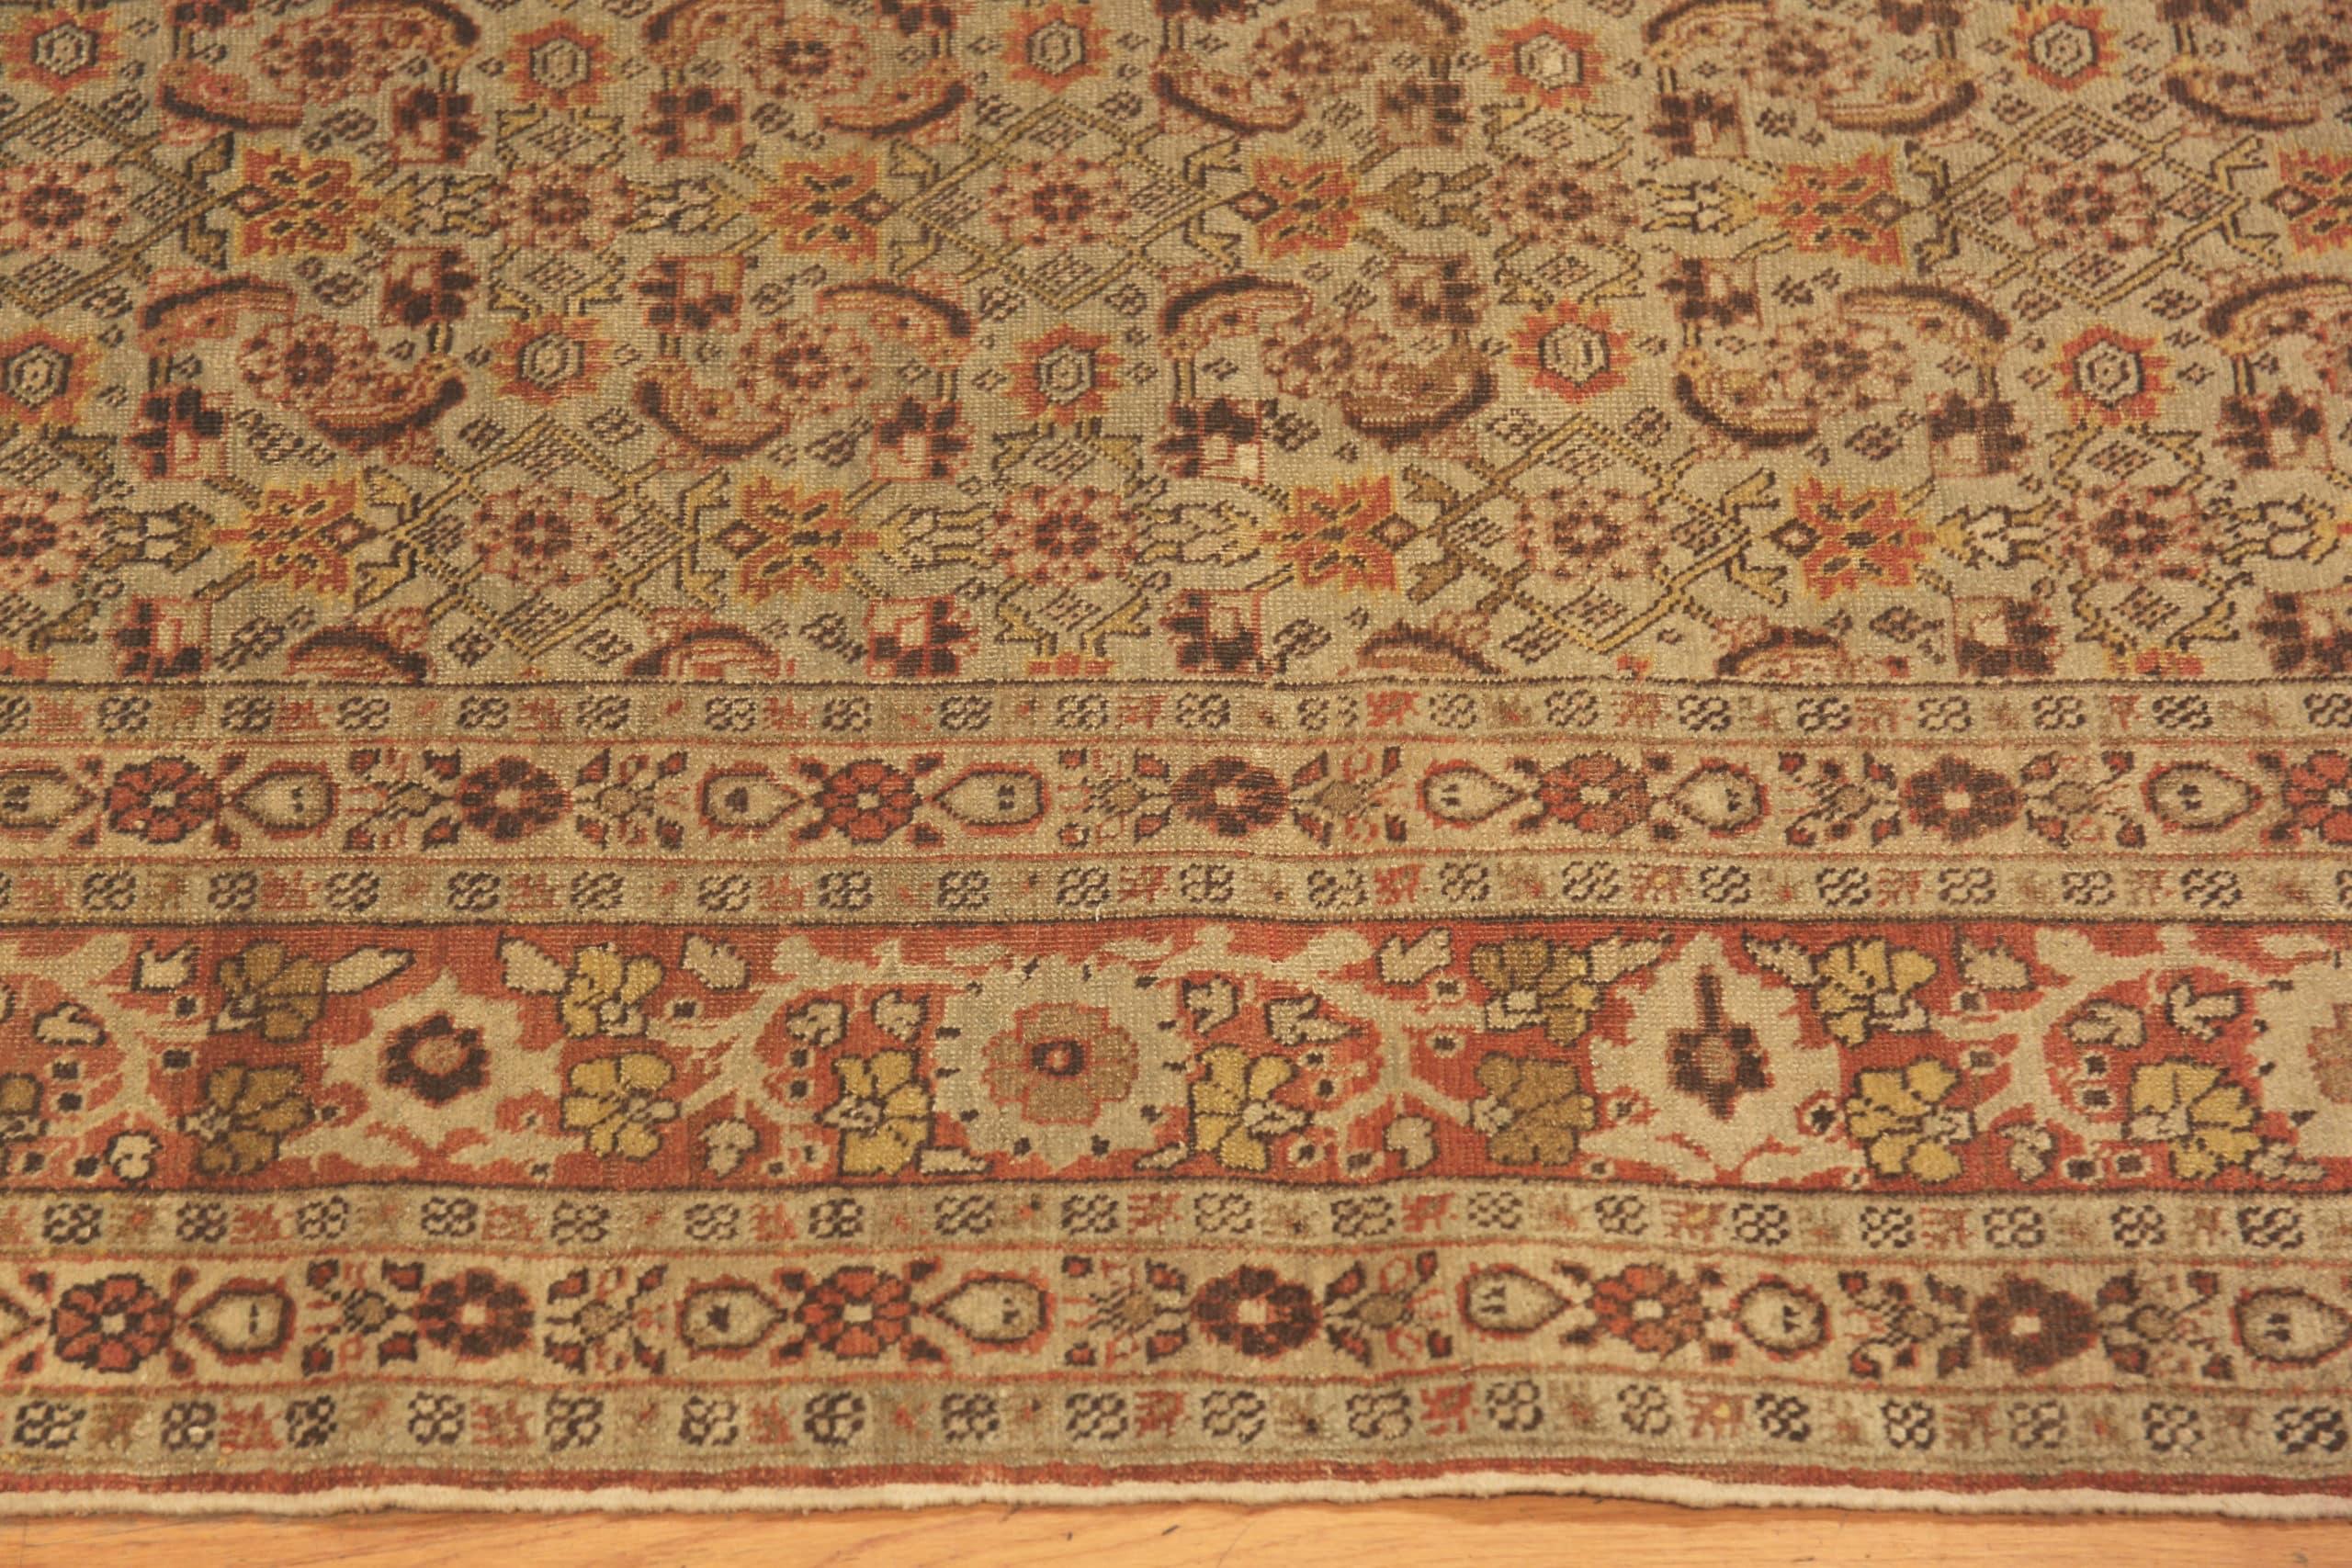 Beautiful Fine Small Size Antique Persian Tabriz Herati Rug, Country of Origin: Persia, Circa Date: 1900. Size: 4 ft 2 in x 5 ft 9 in (1.27 m x 1.75 m)
